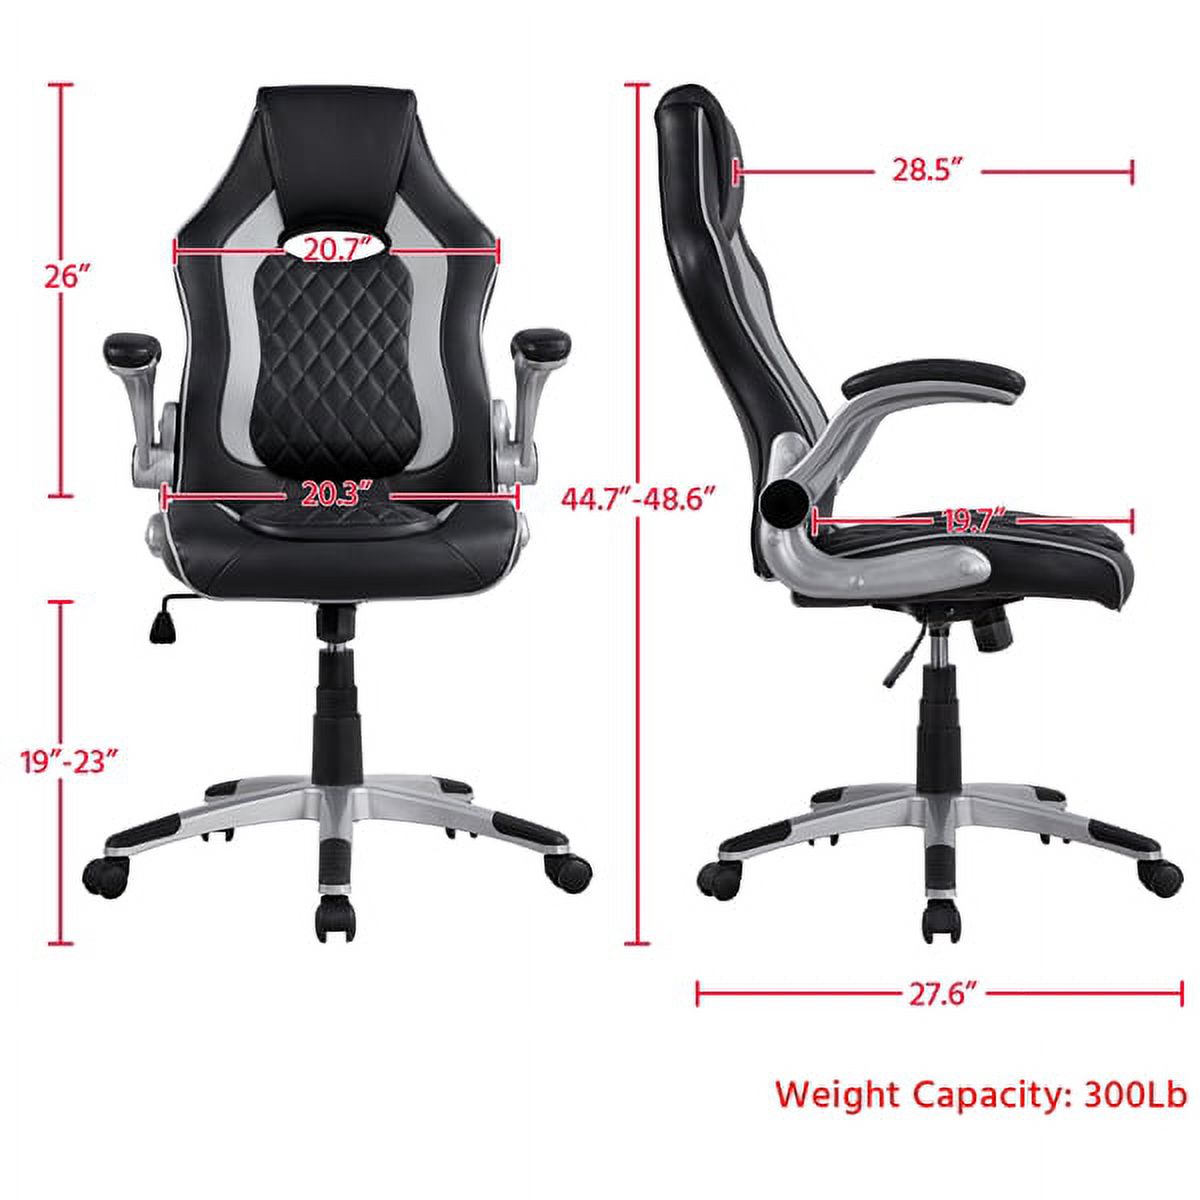 SmileMart Adjustable Ergonomic High Back Gaming Chair, Black/Gray - image 4 of 13